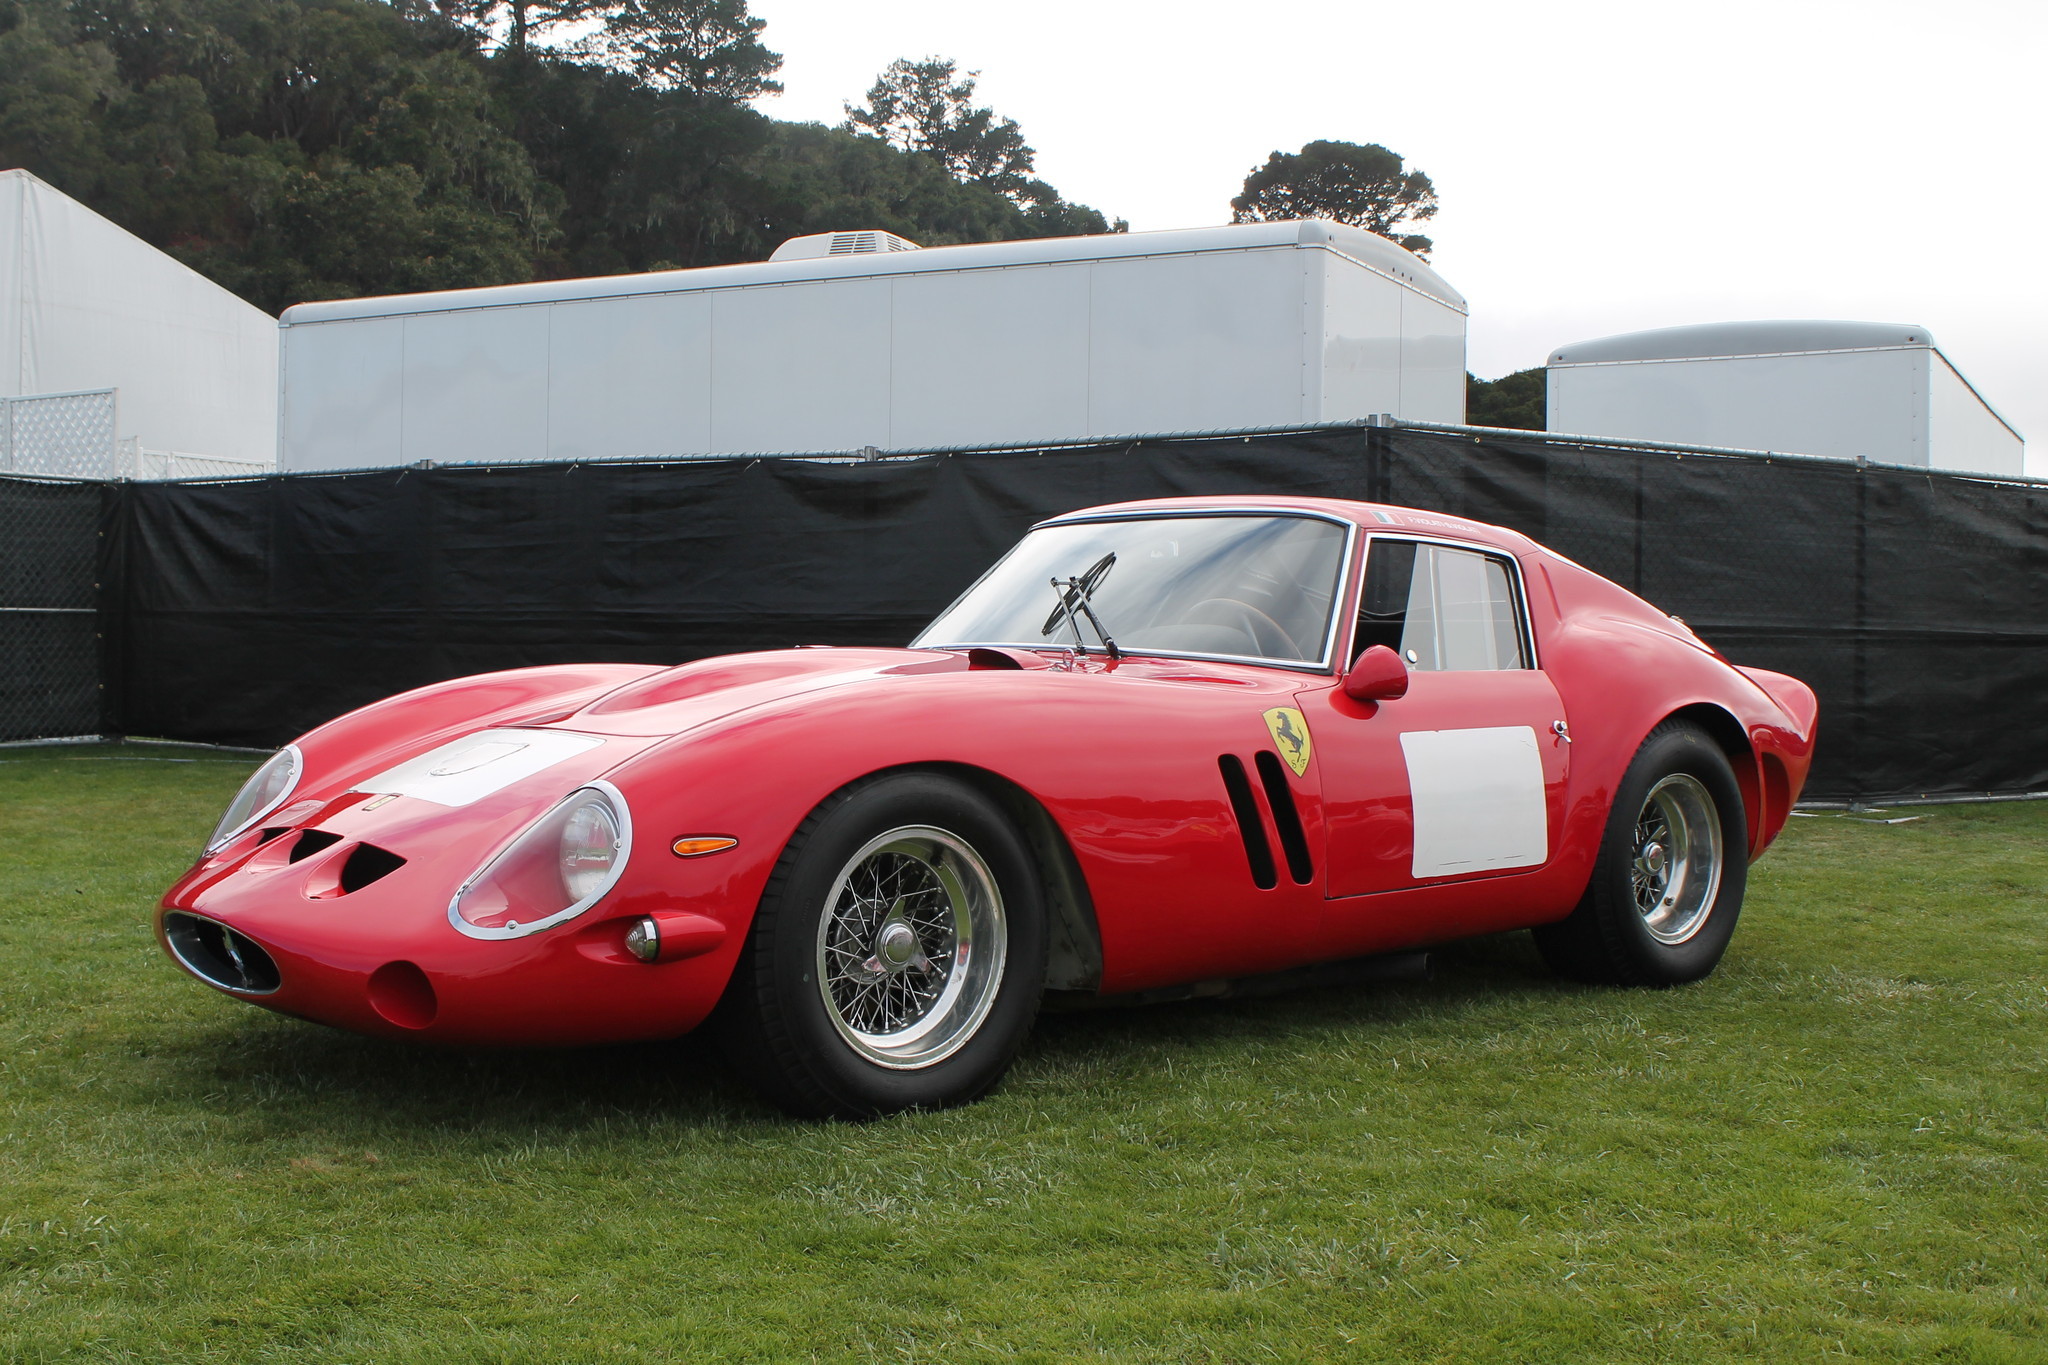 '62 Ferrari 250 GTO sells for record $38 million at Monterey Car Week